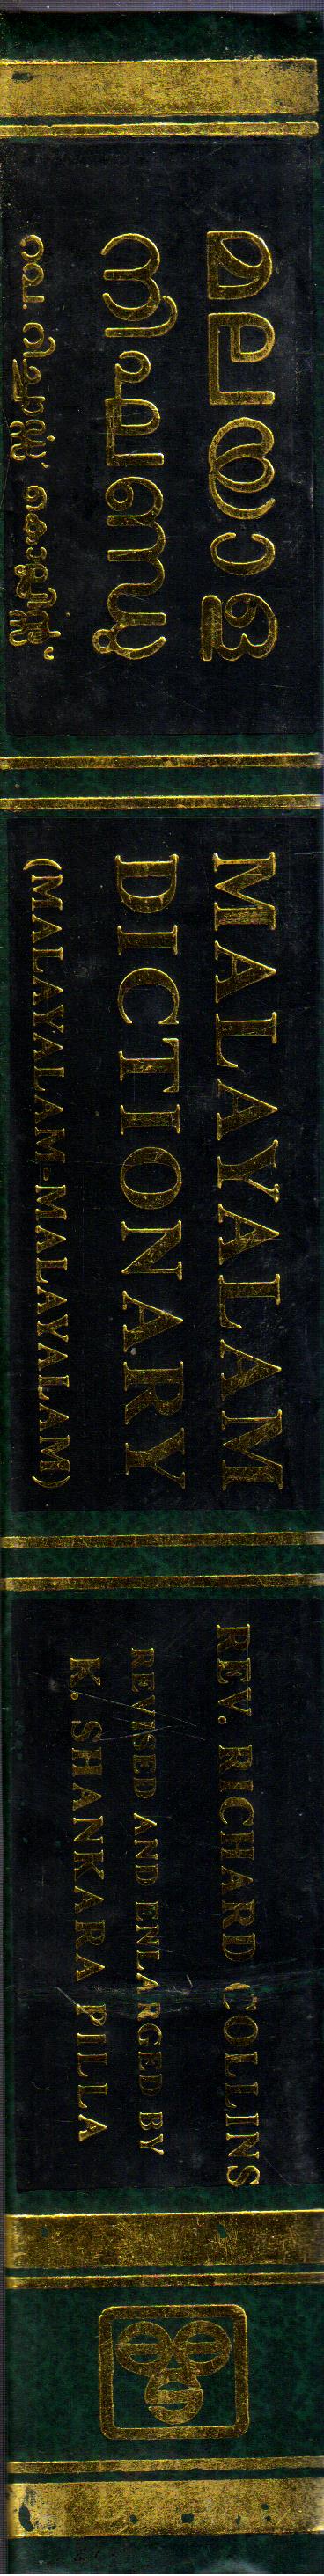 Malayalam Dictionary